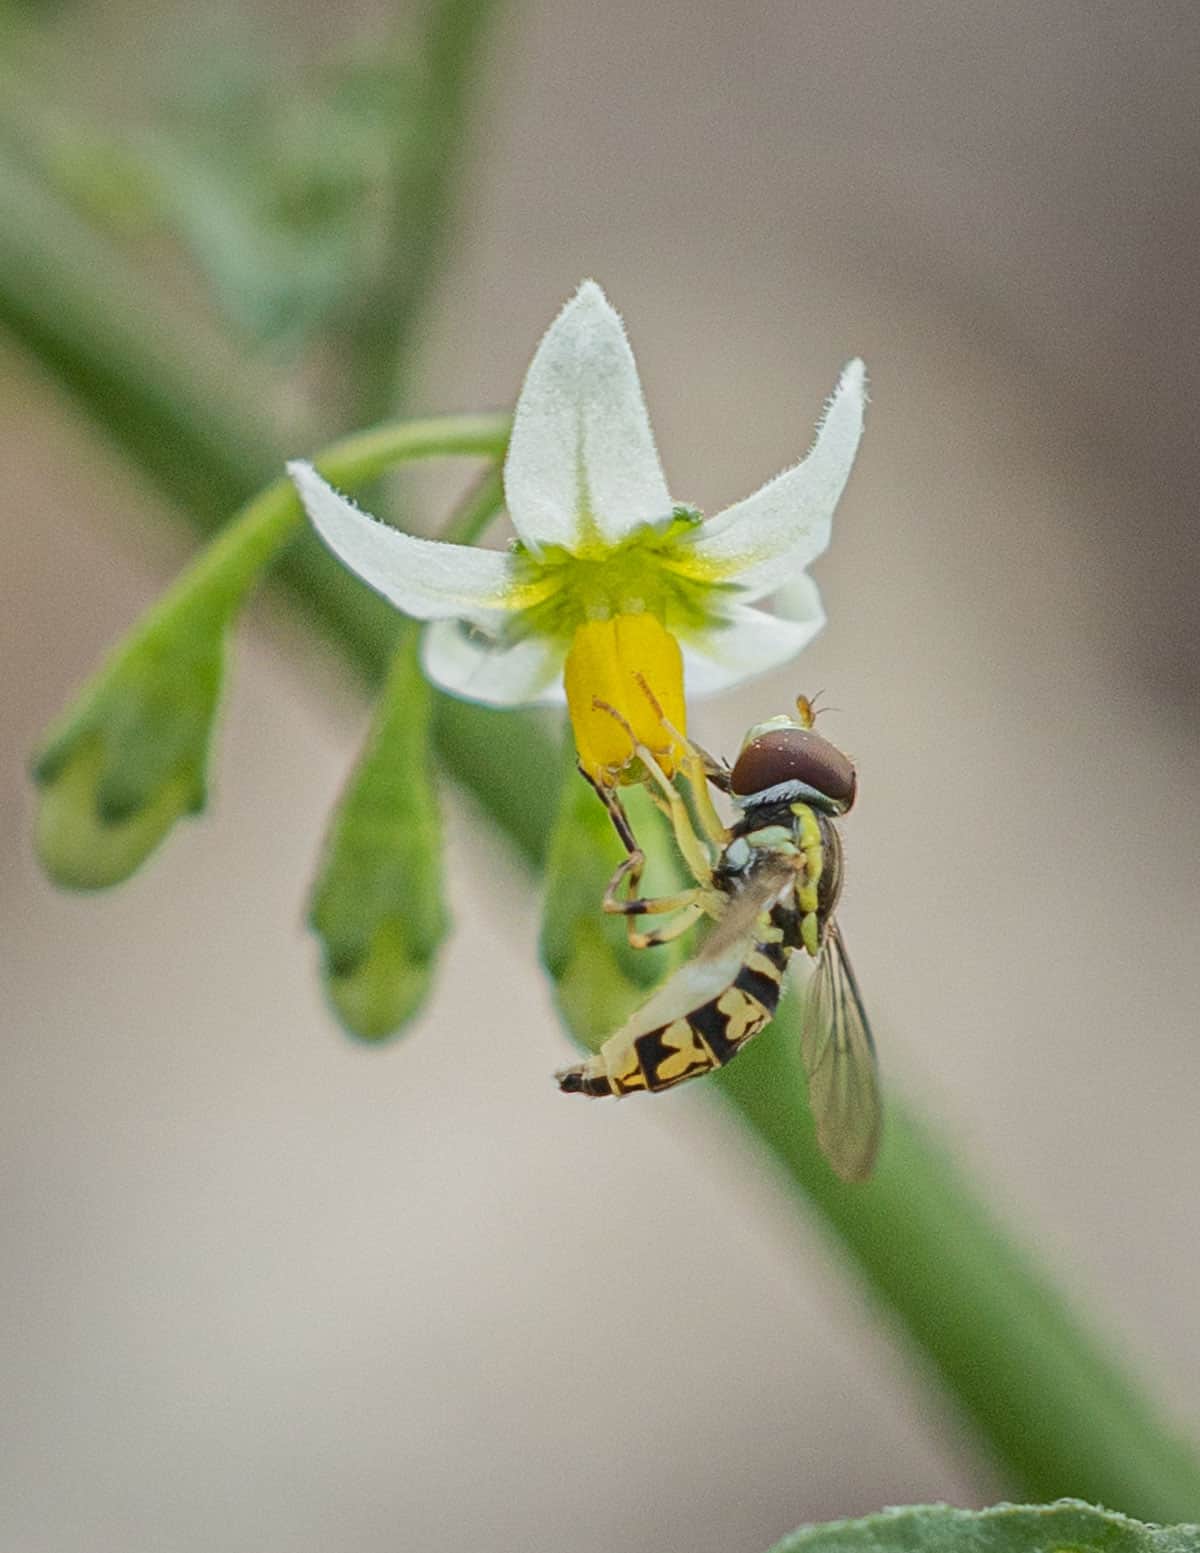 A bee visiting a Western black nightshade flower (Solanum americanum). 